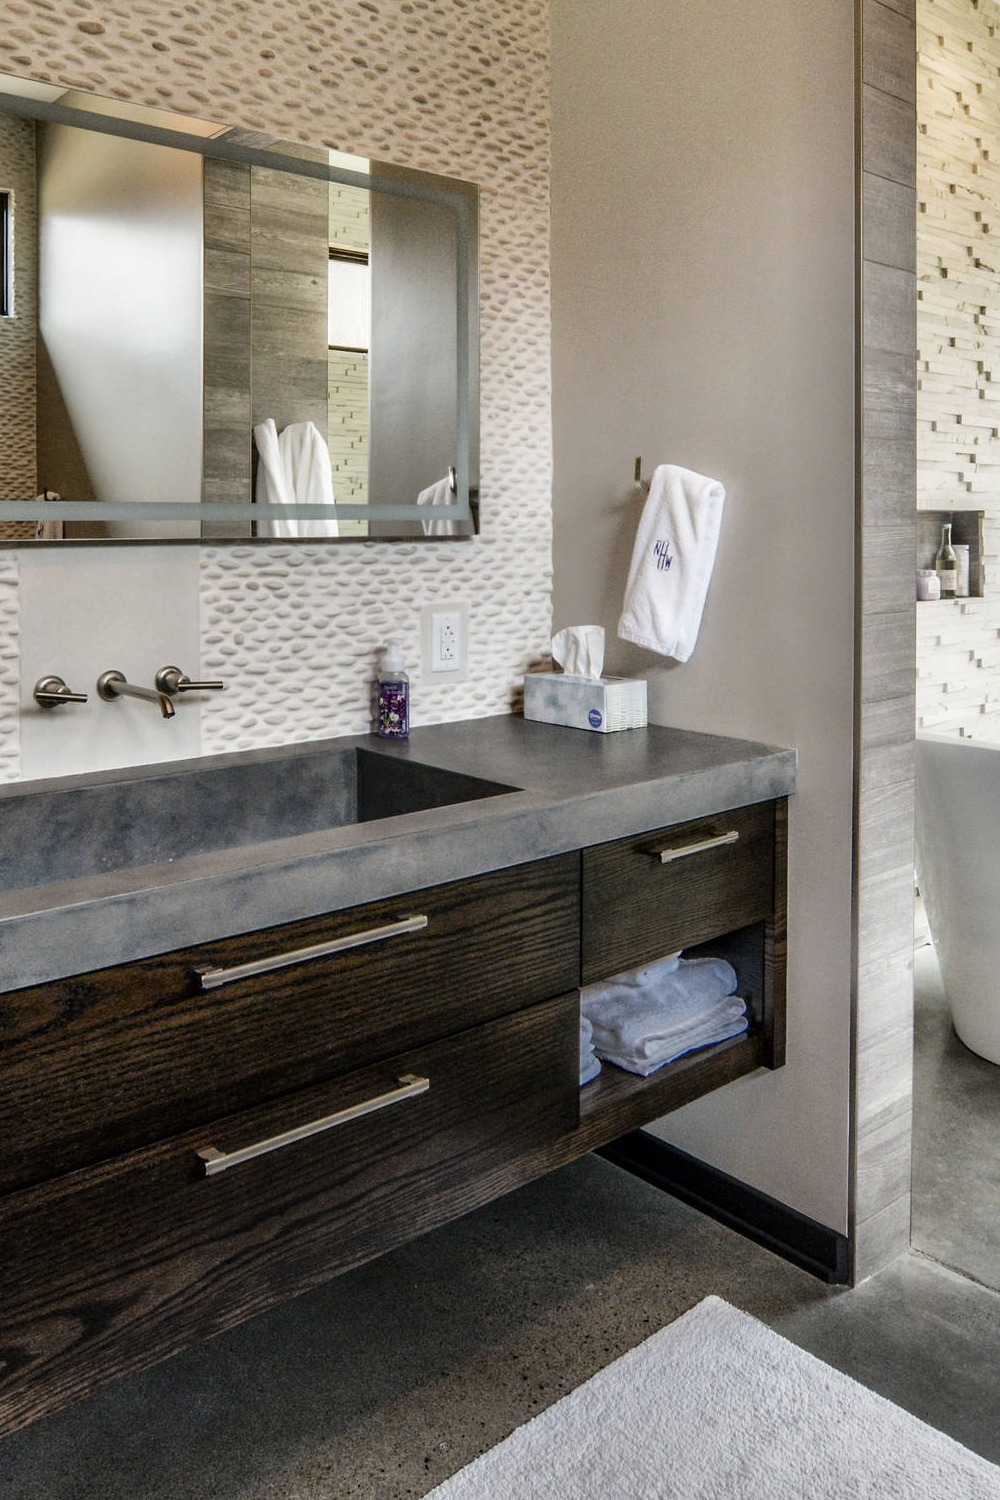 Bathroom Backsplash Ideas Vanity Gray Mosaic Painted Floor Pattern Grout Contemporary Materials Rustic Shades Floor Style